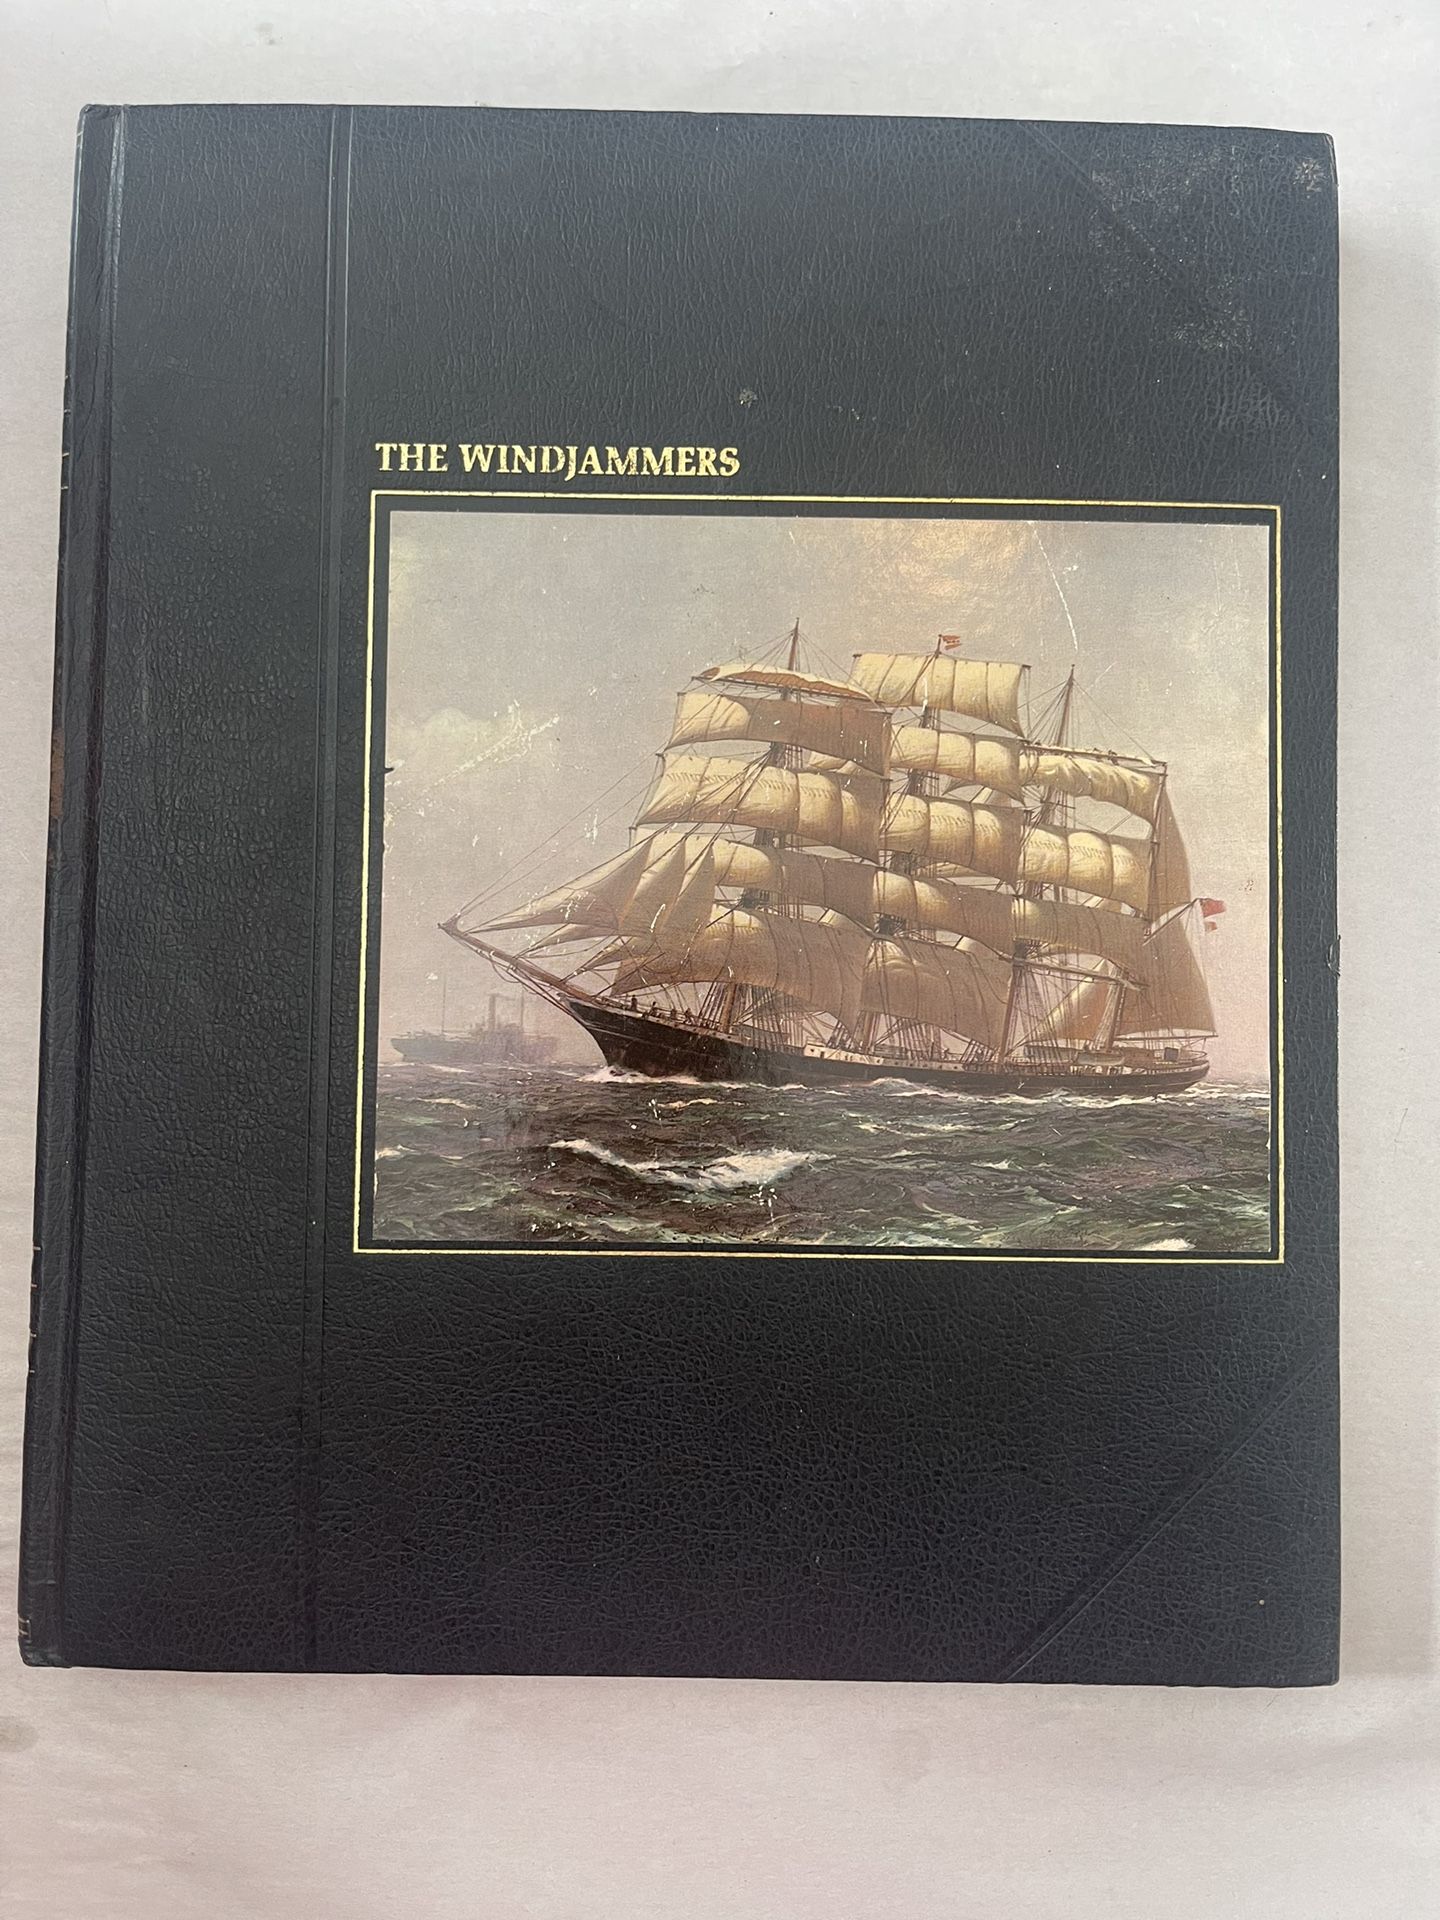 The Windjammers (The "Seafarers" series)